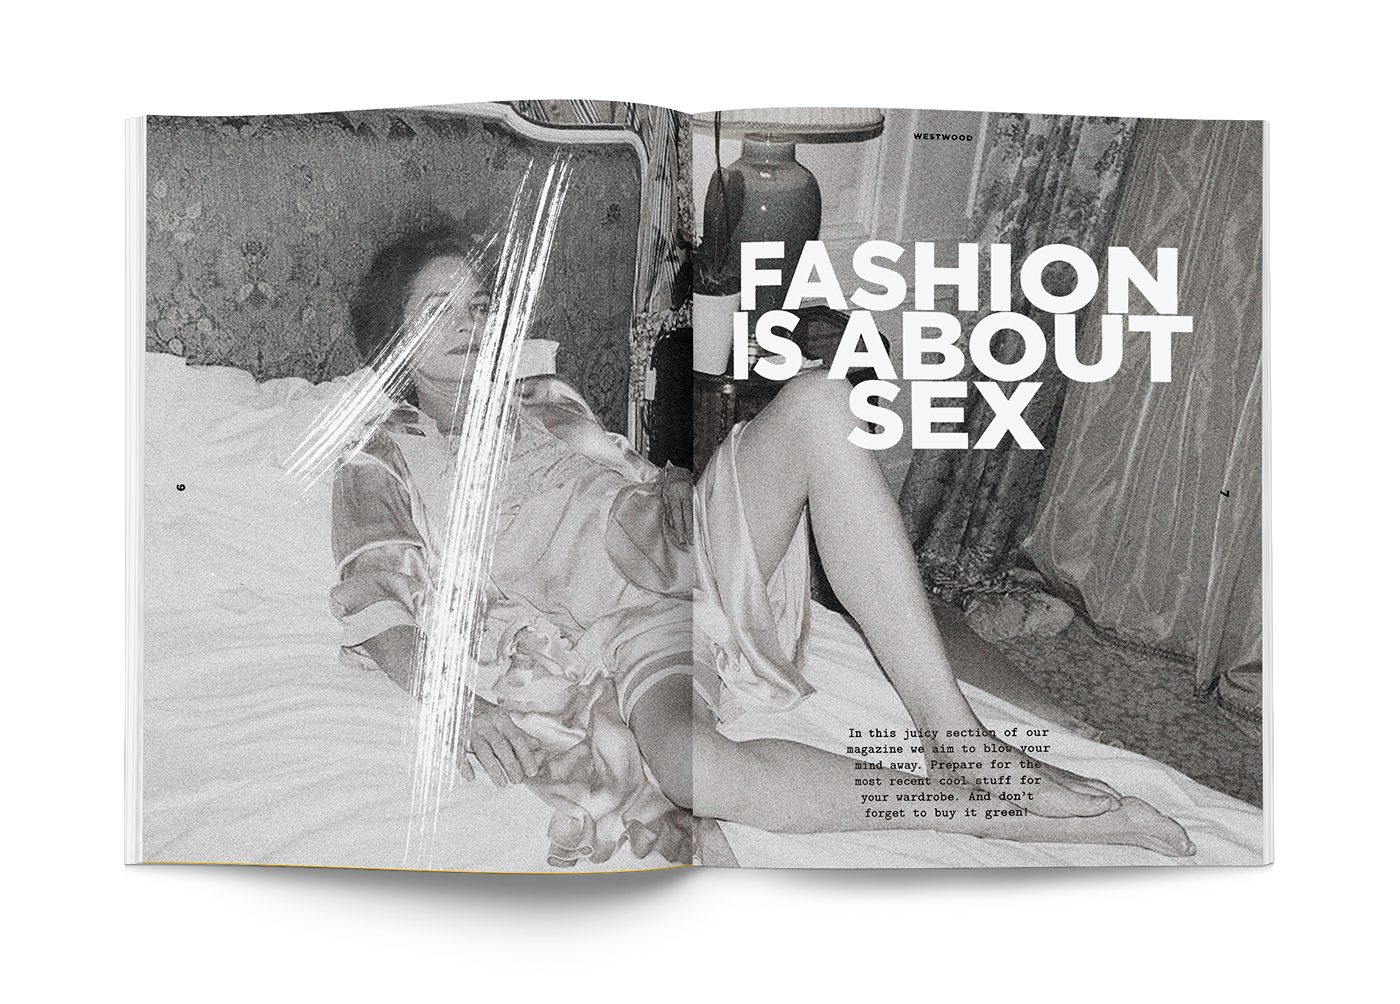 rebel rebellious old ladies westwood vivienne westwood badass print design lifestyle magazine Style fashionable quote